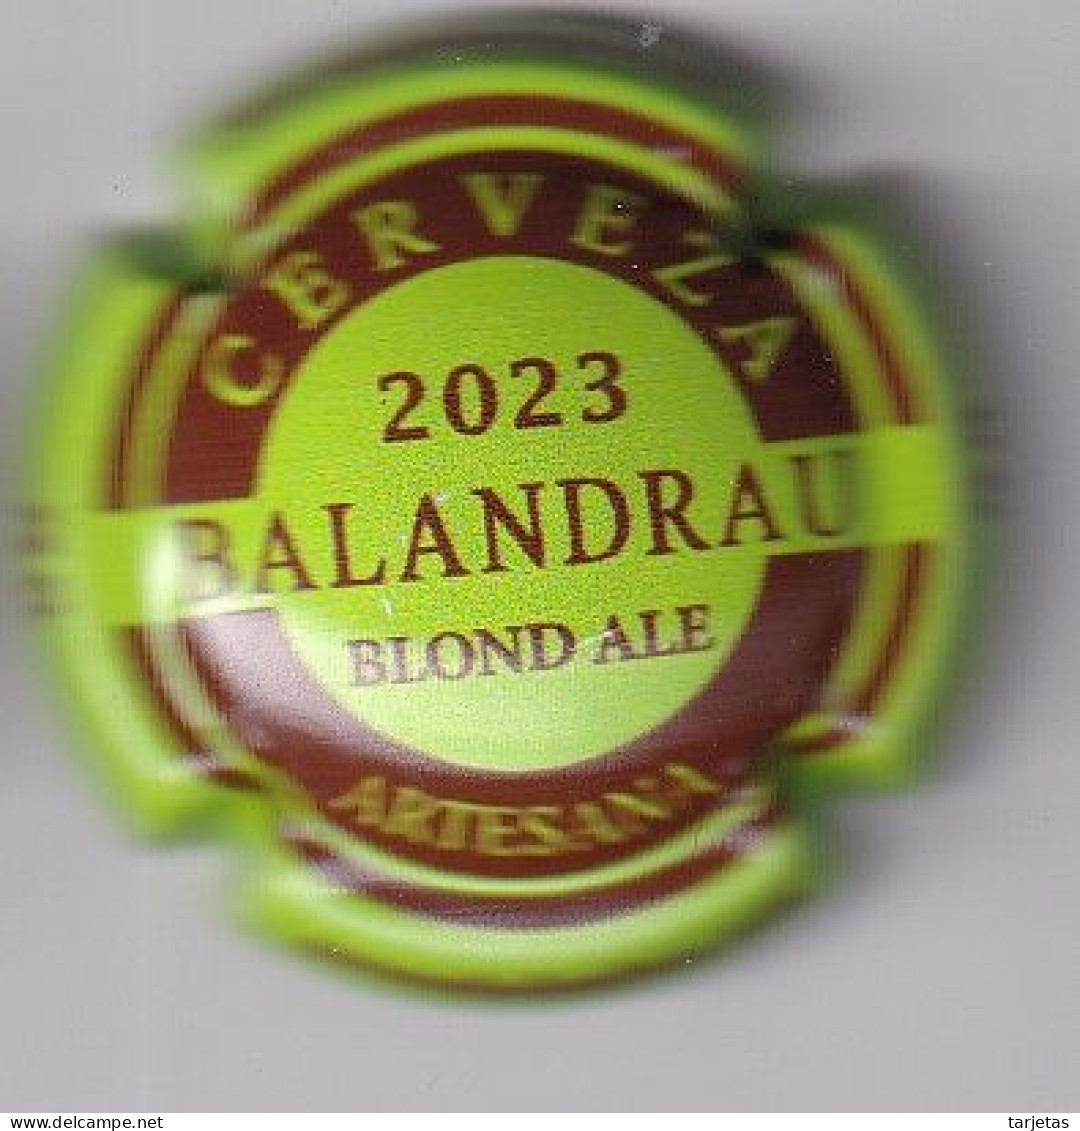 CHAPA DE CERVEZA ARTESANA BALANDRAU BLOND ALE 2023 (BEER-BIERE) CORONA - Beer